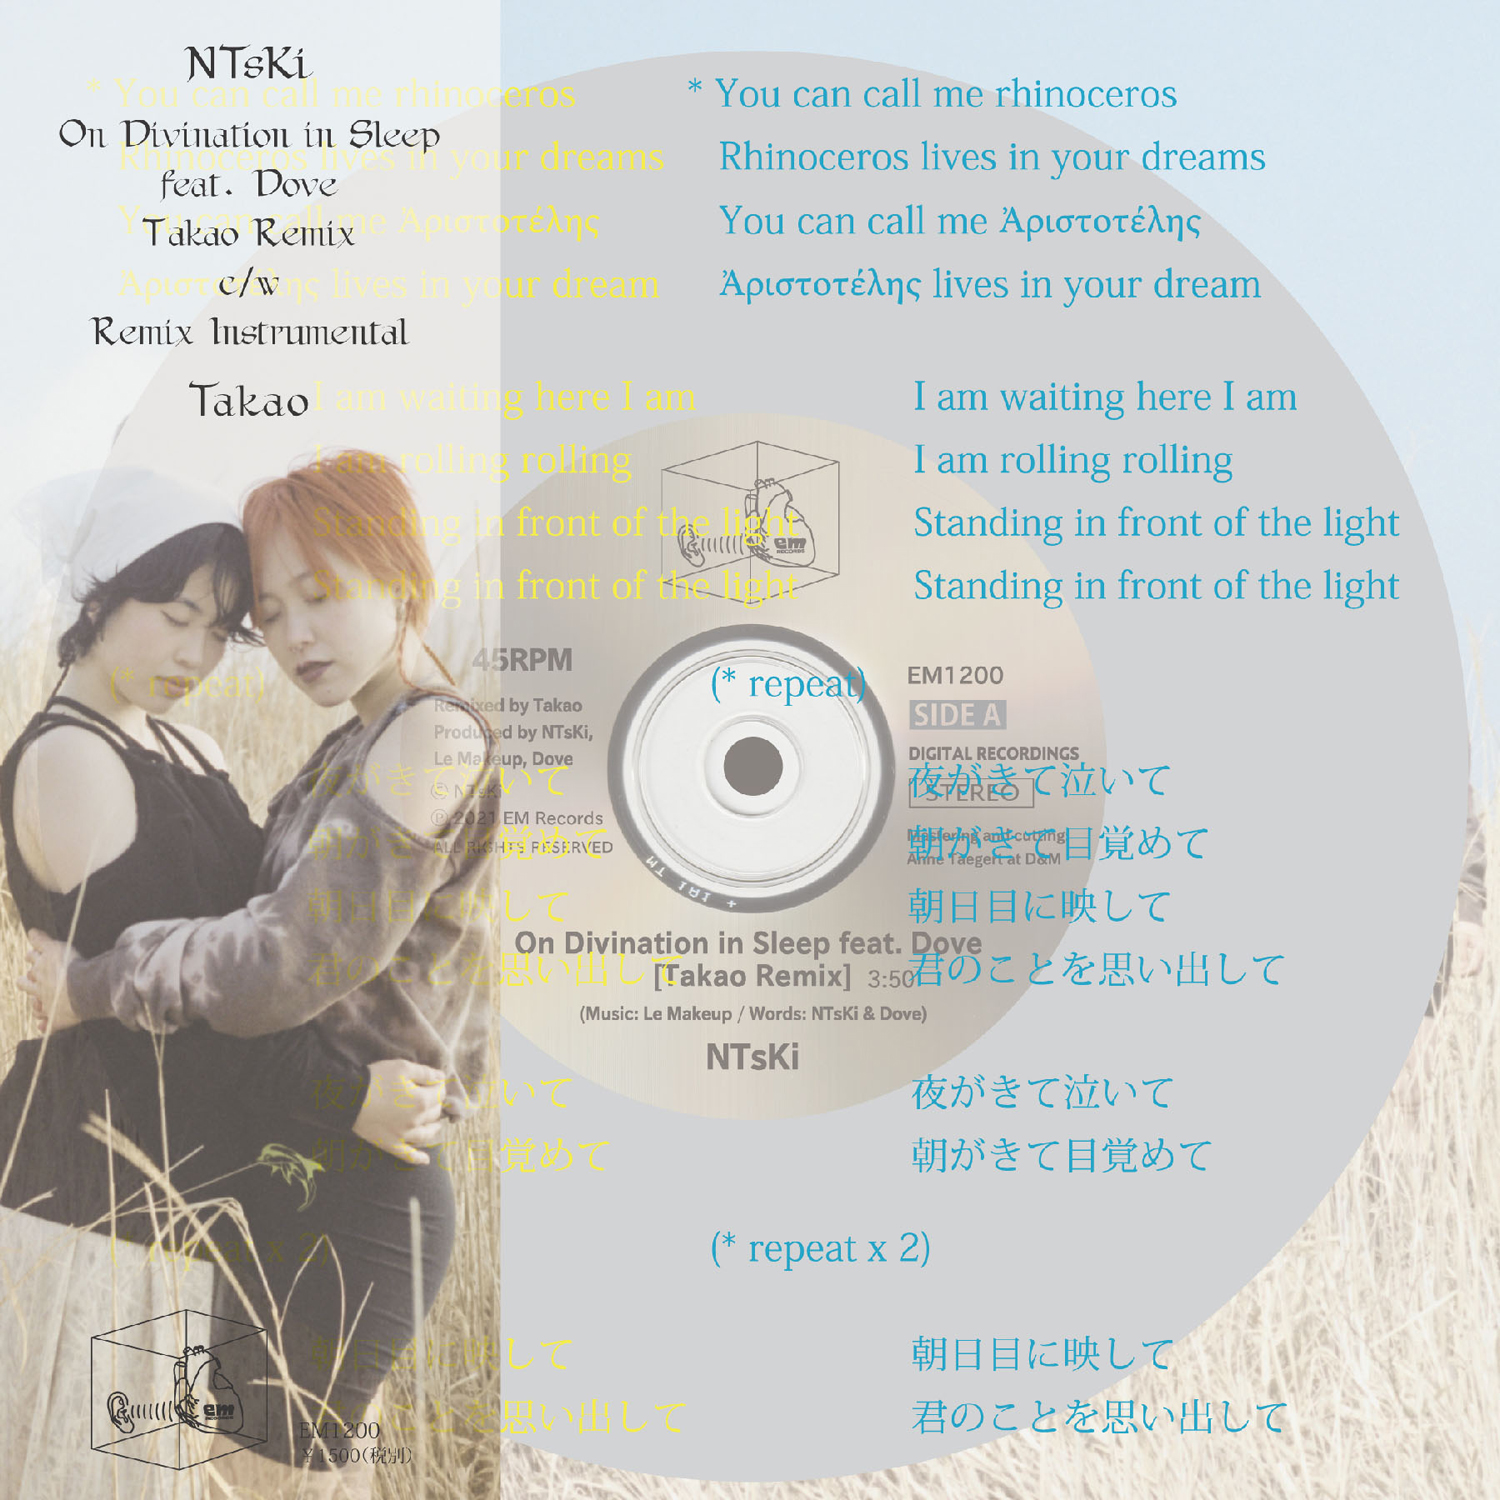 NTsKi "On Divination in Sleep feat. Dove (Takao Remix) c/w Remix Instrumental (by Takao)"